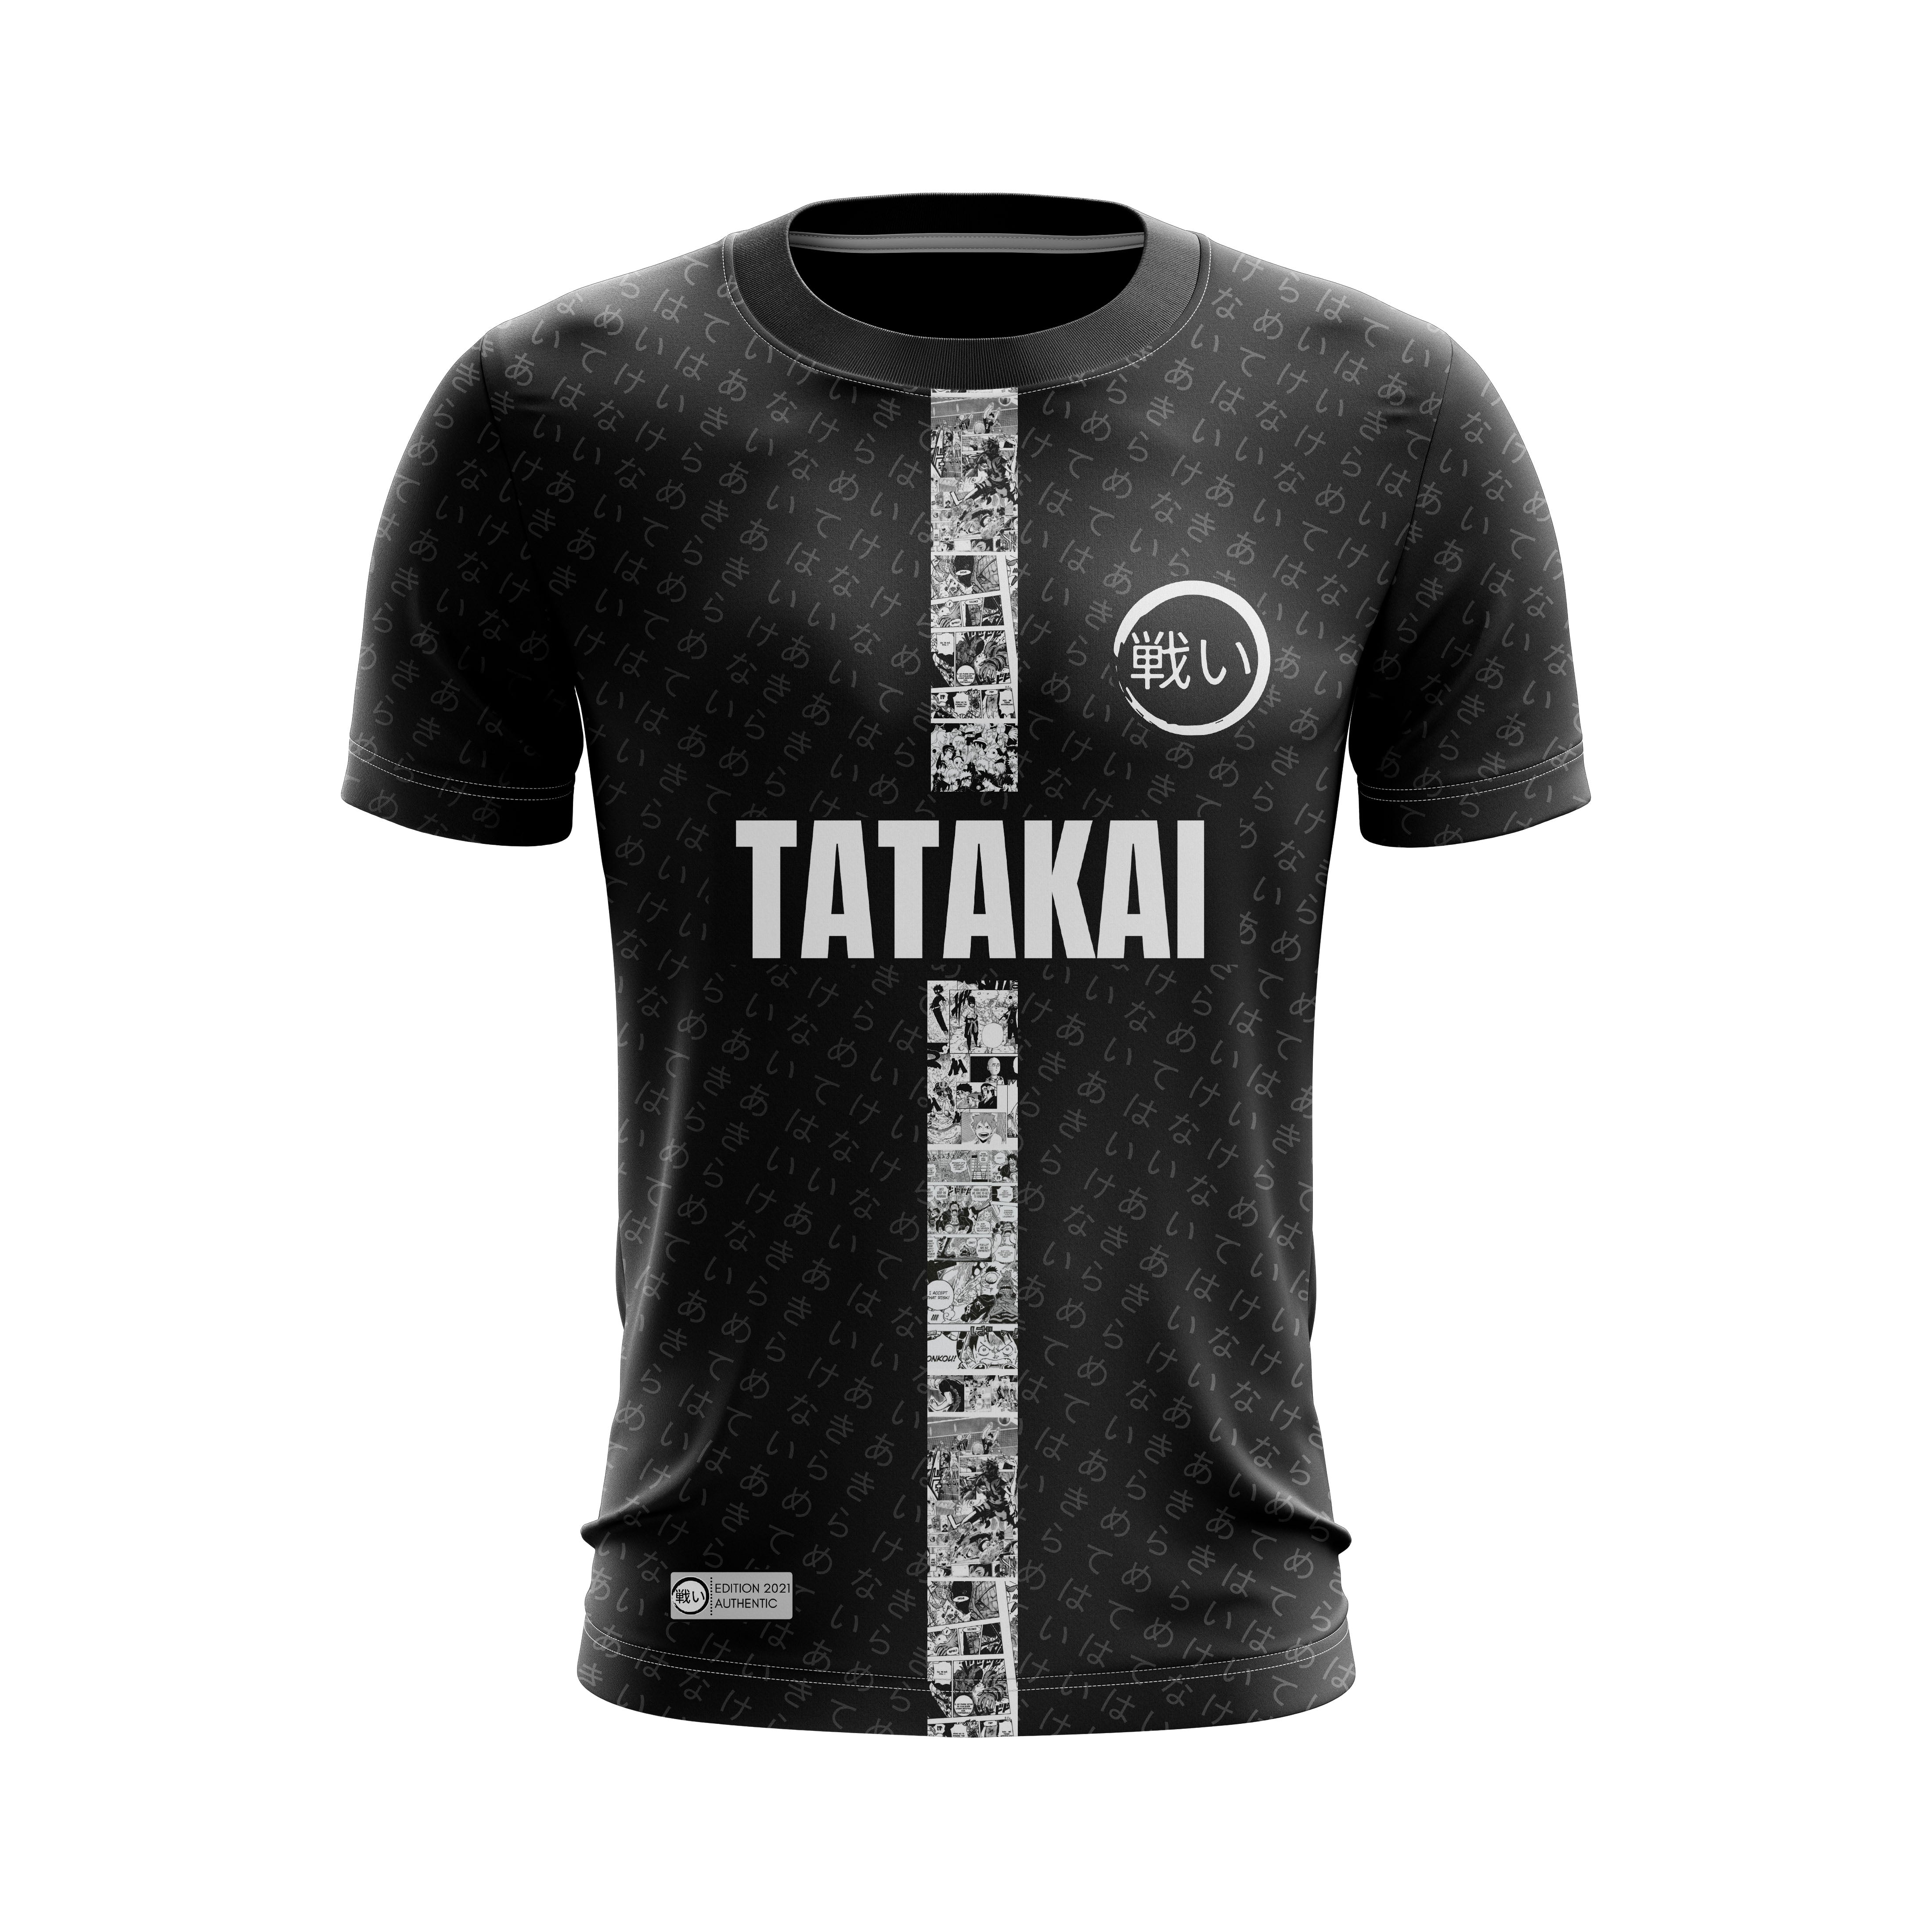 Tatakai jersey - Eternal dream 